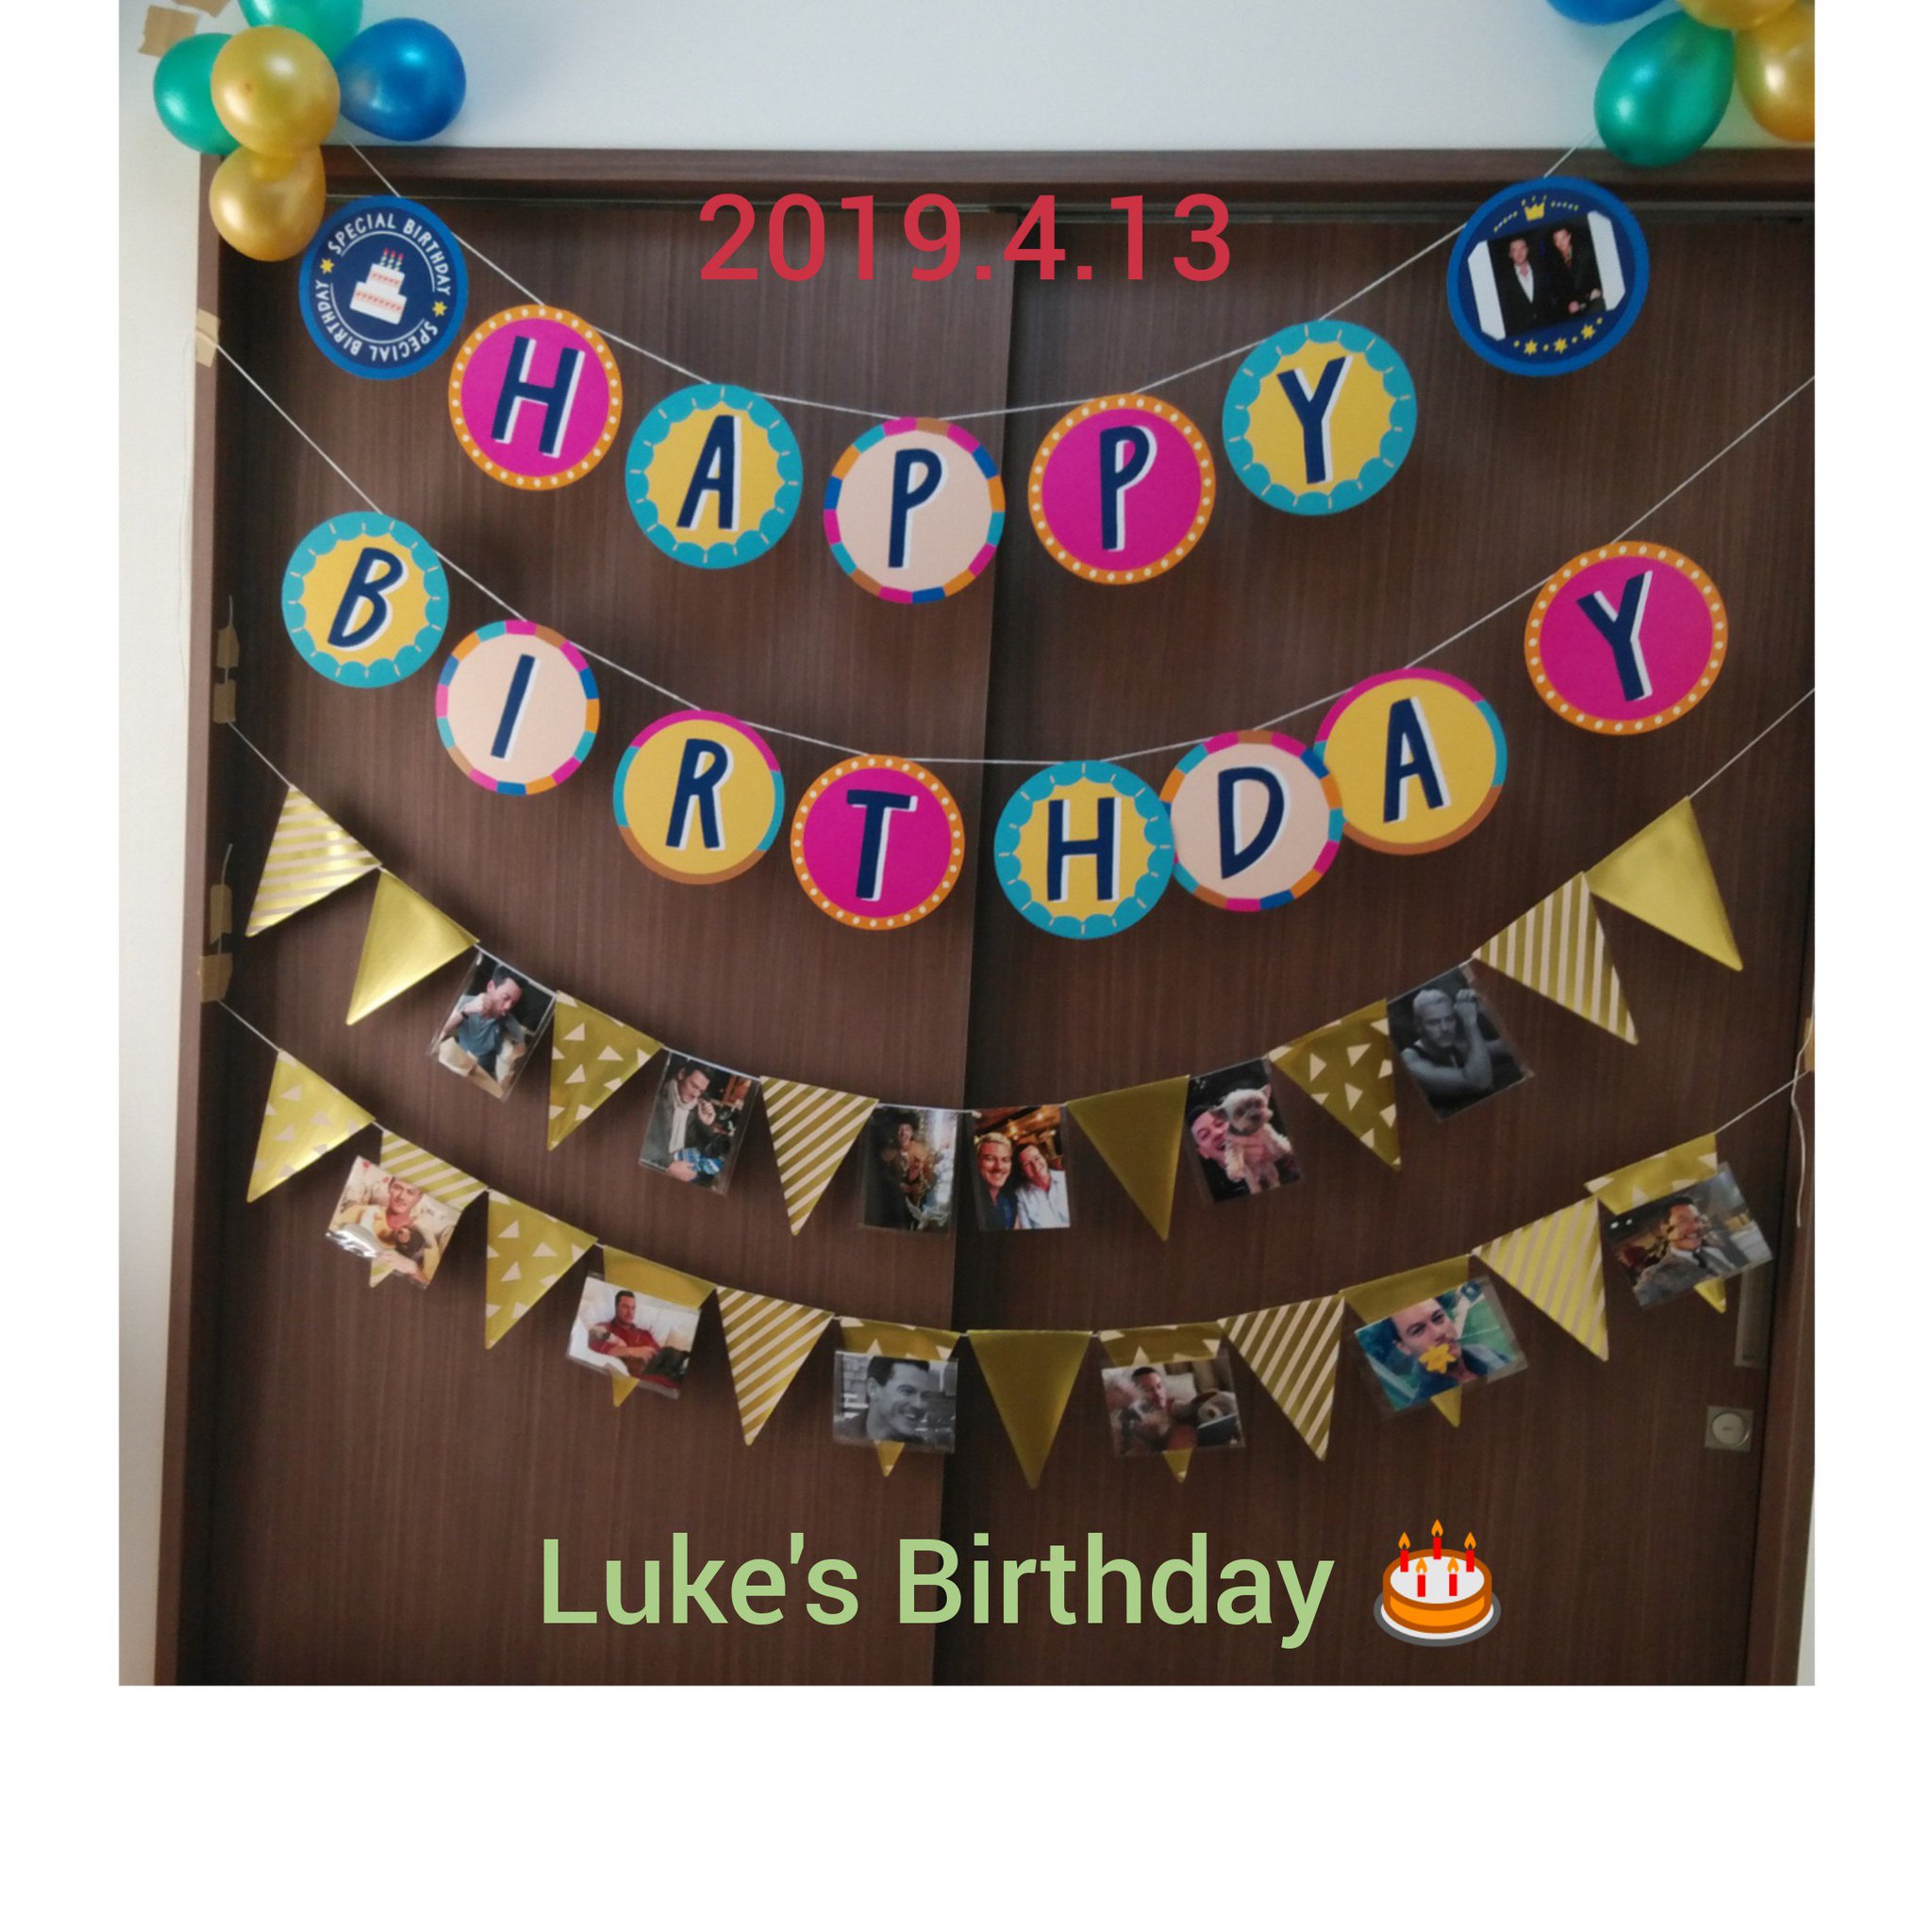 Mr.Luke Evans.

Happy birthday            From Japan 